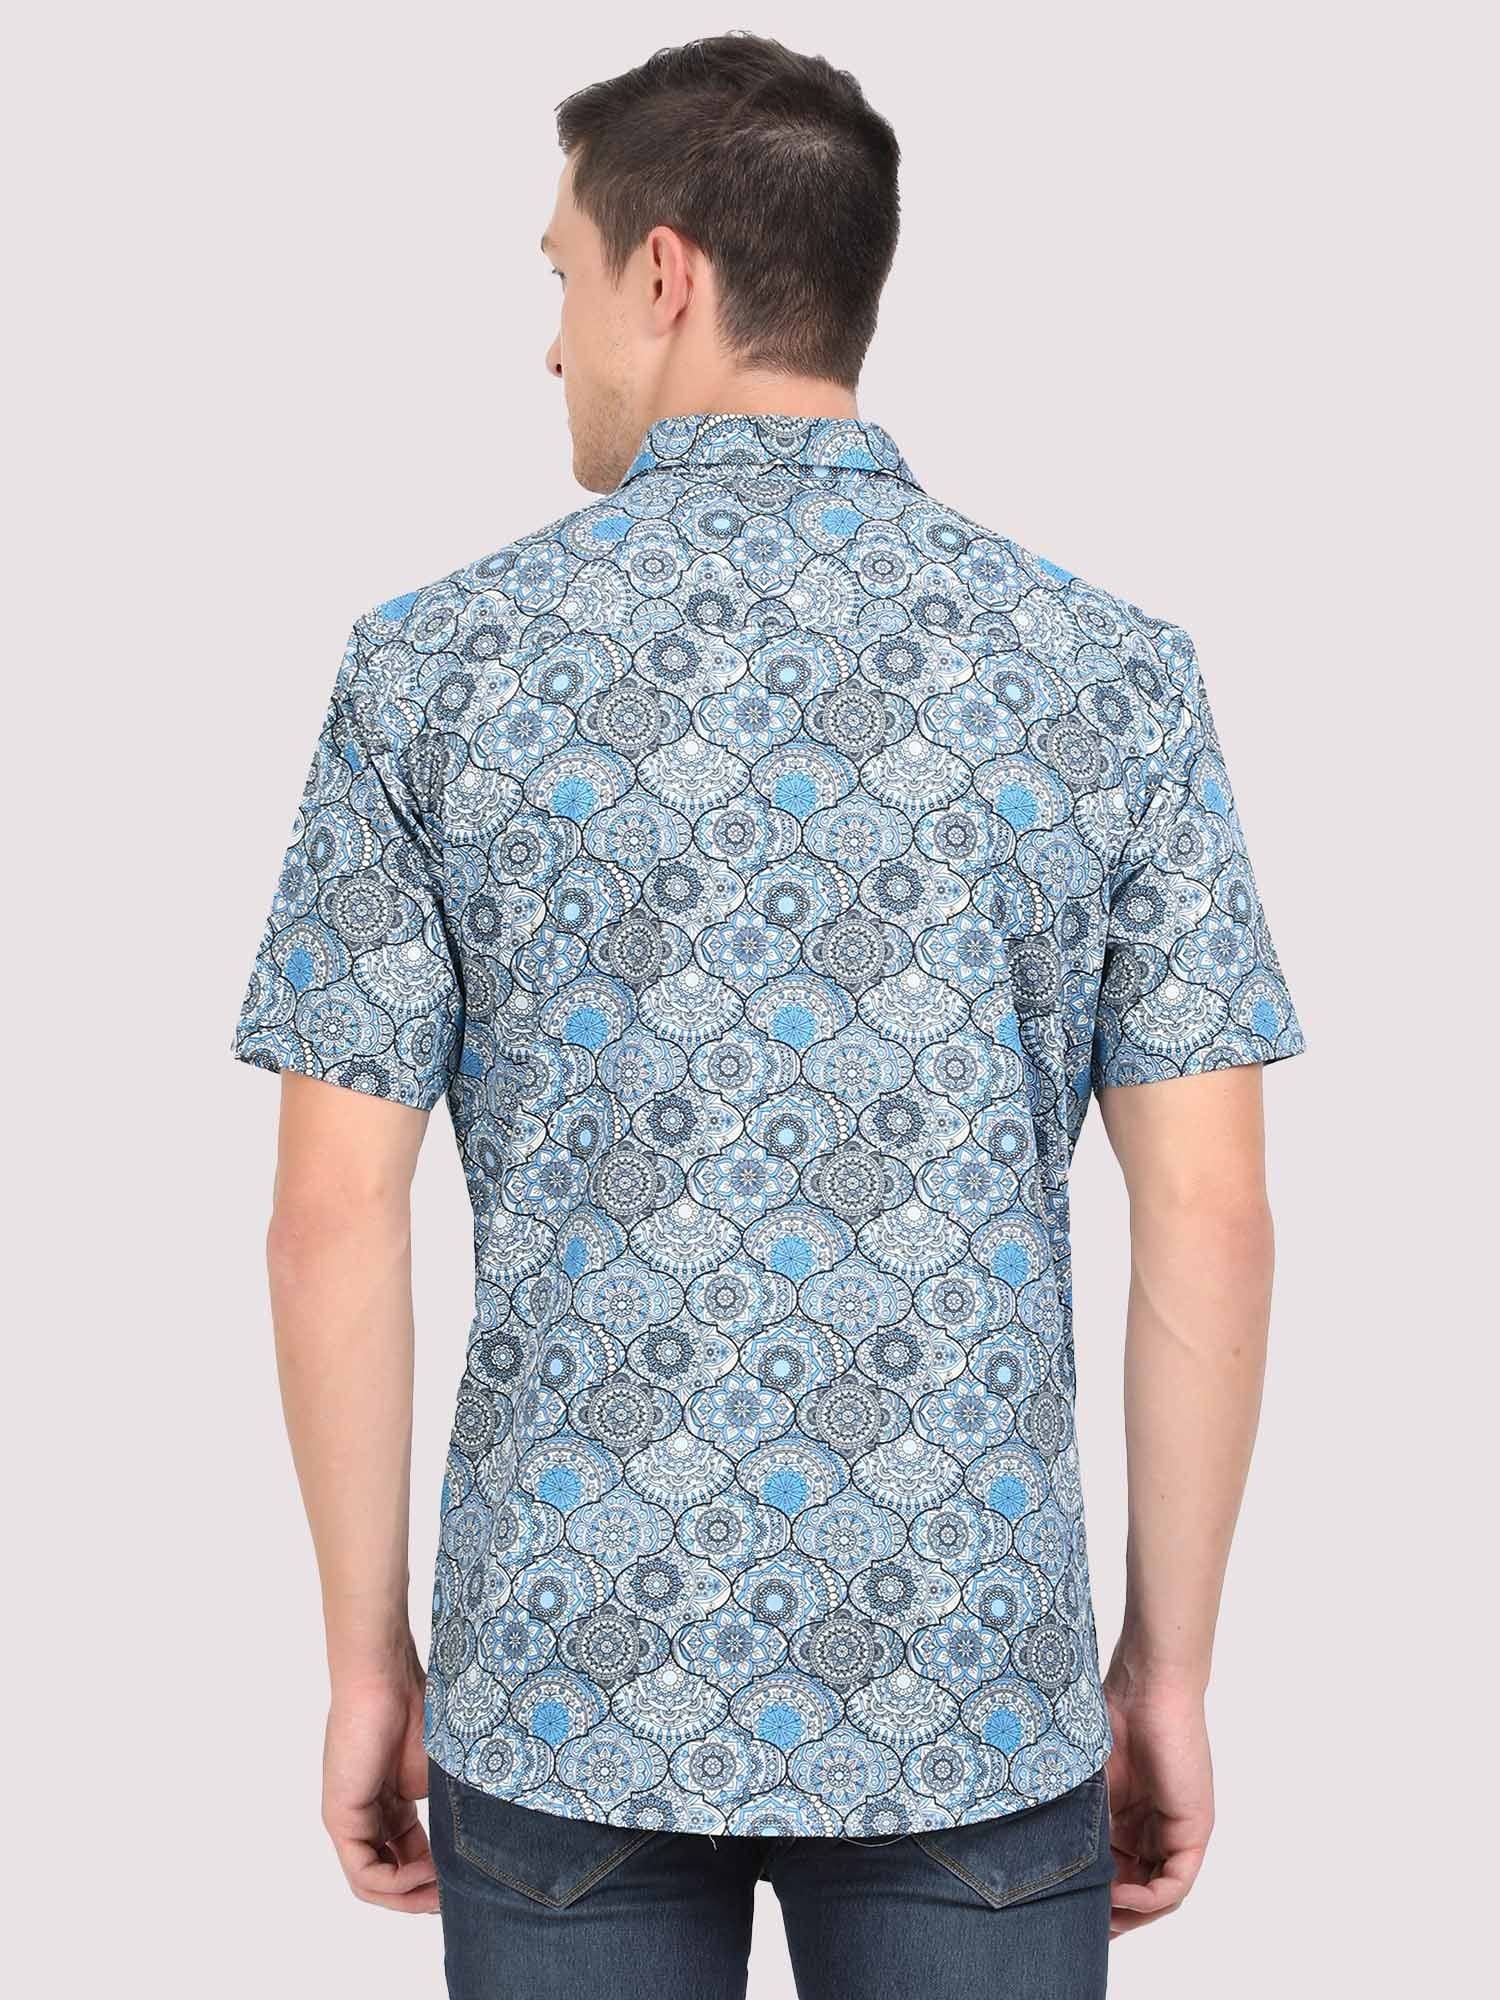 Mandala Grey Digital Printed Half Shirt - Guniaa Fashions